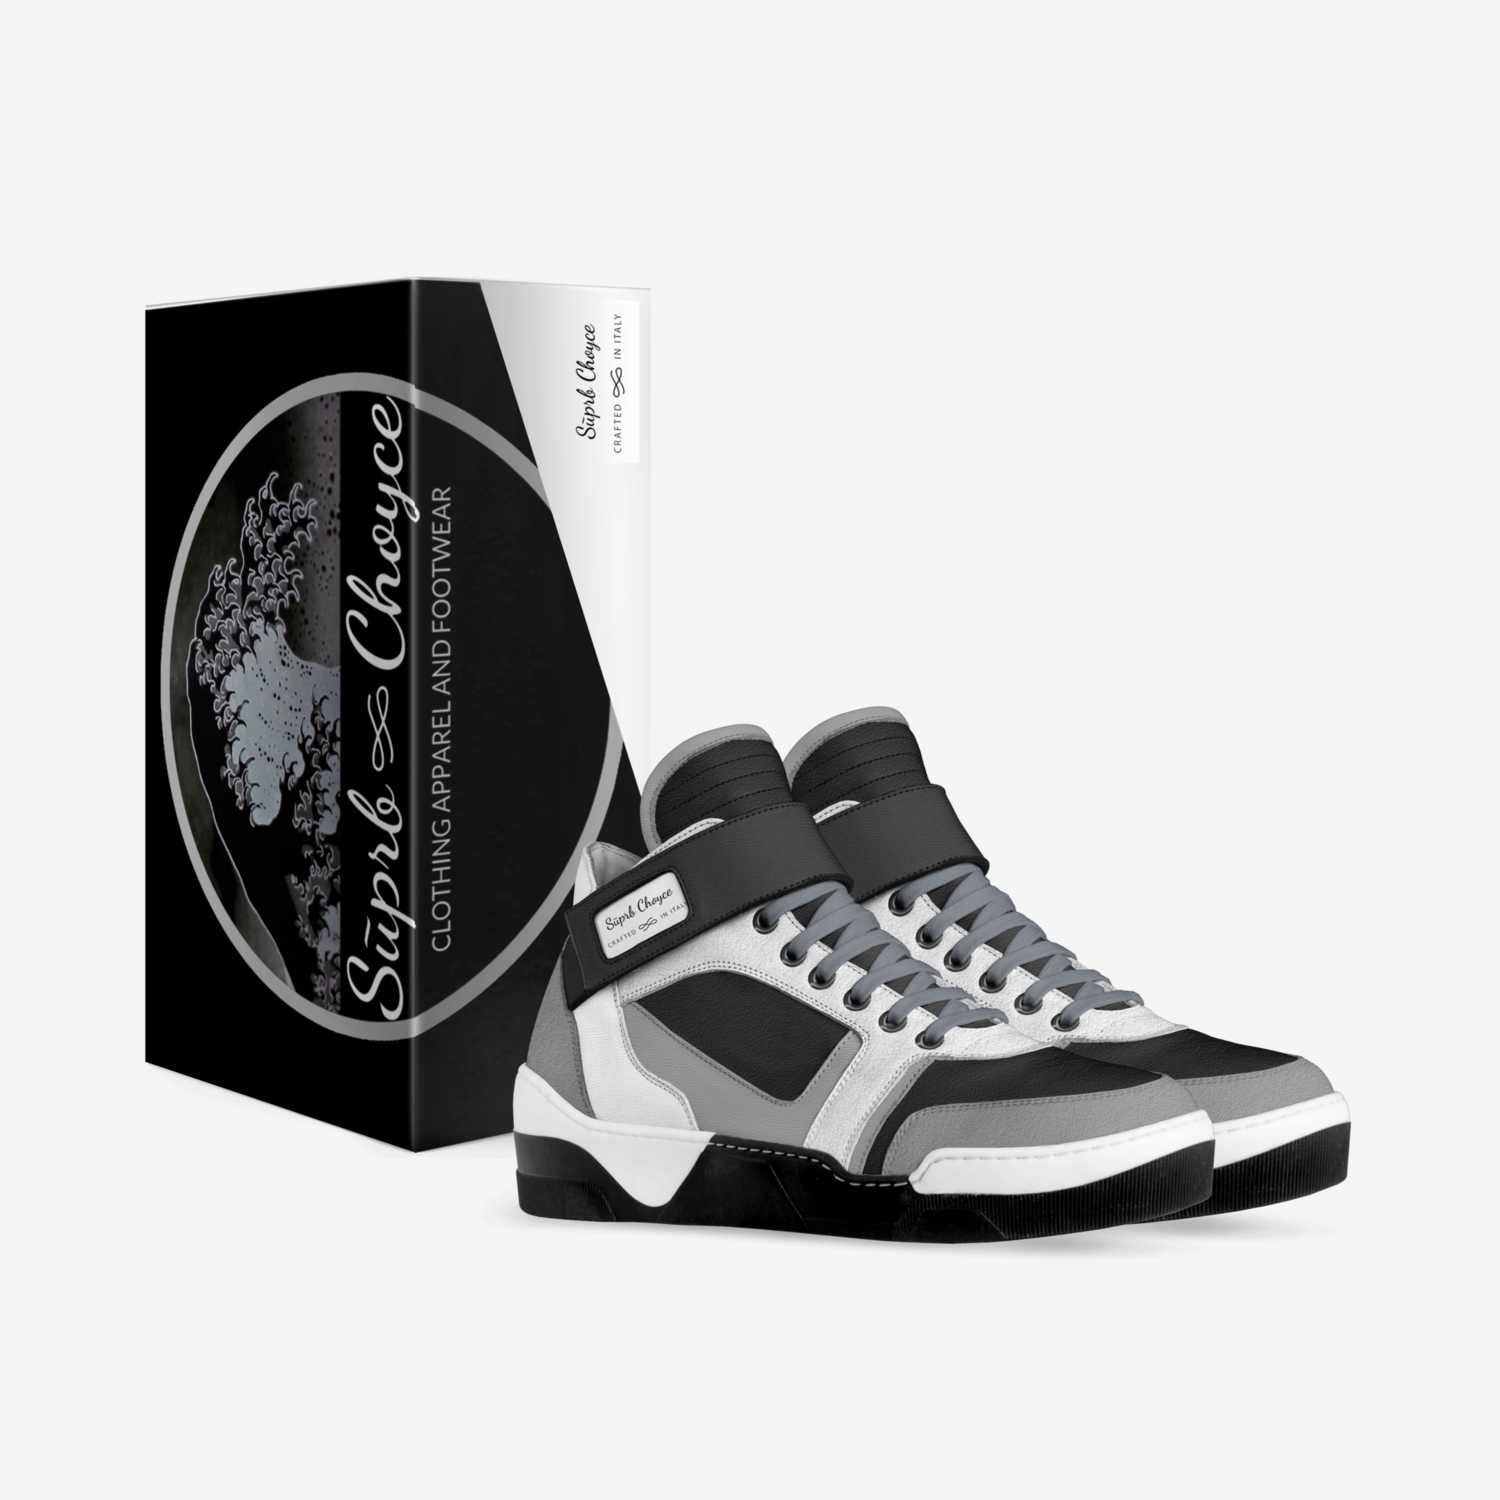 Sūprb Choyce  custom made in Italy shoes by Omari Choyce | Box view